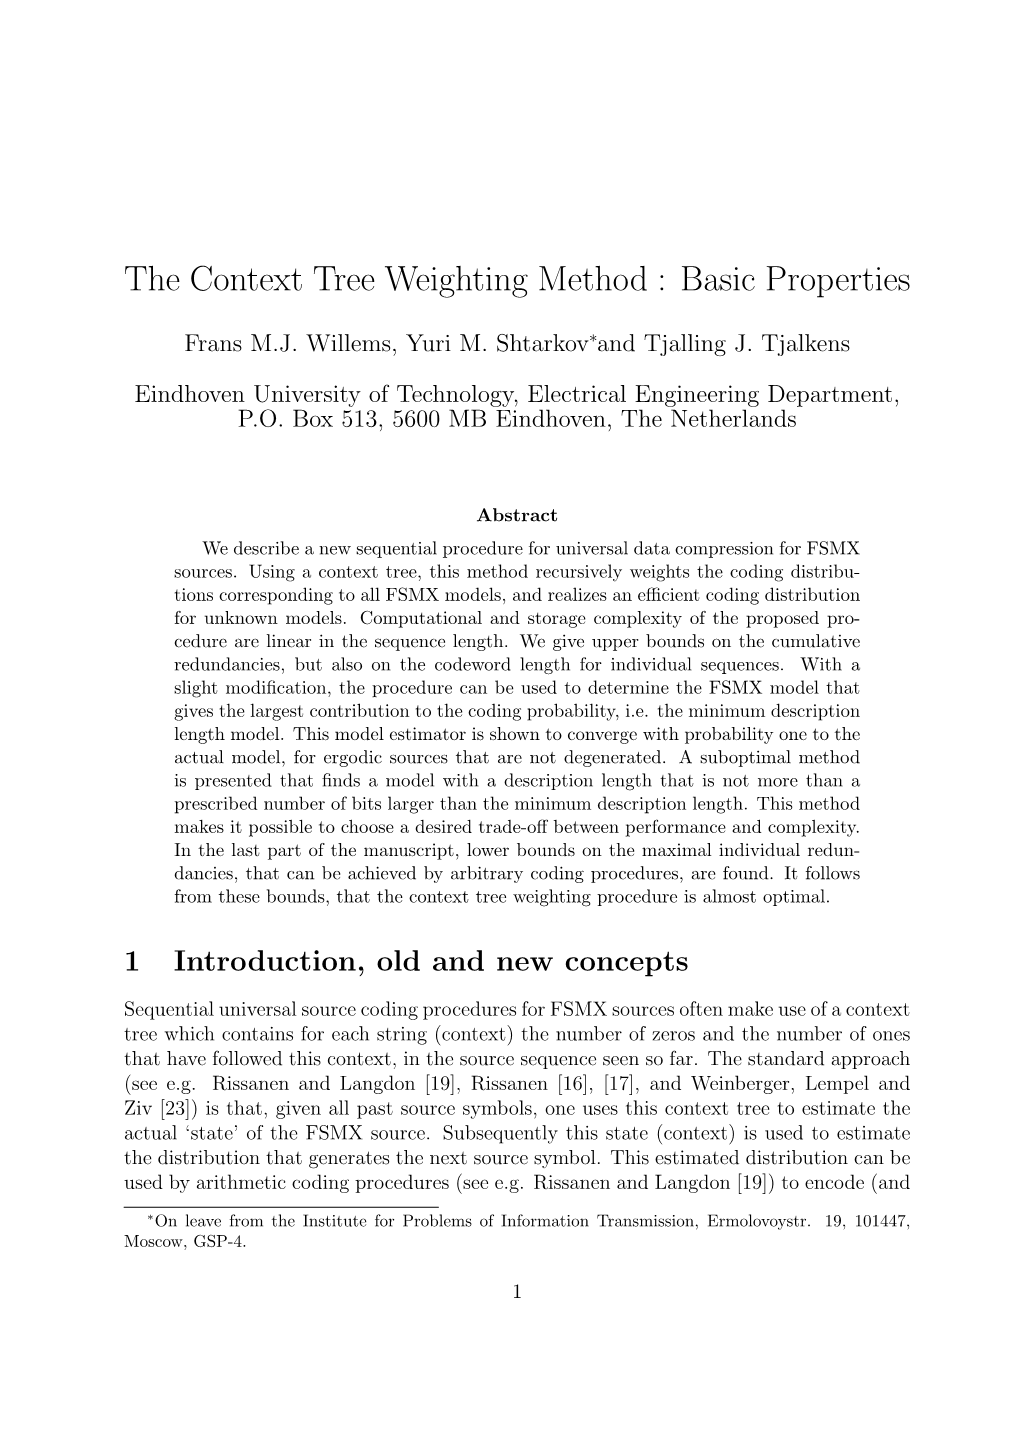 The Context Tree Weighting Method : Basic Properties